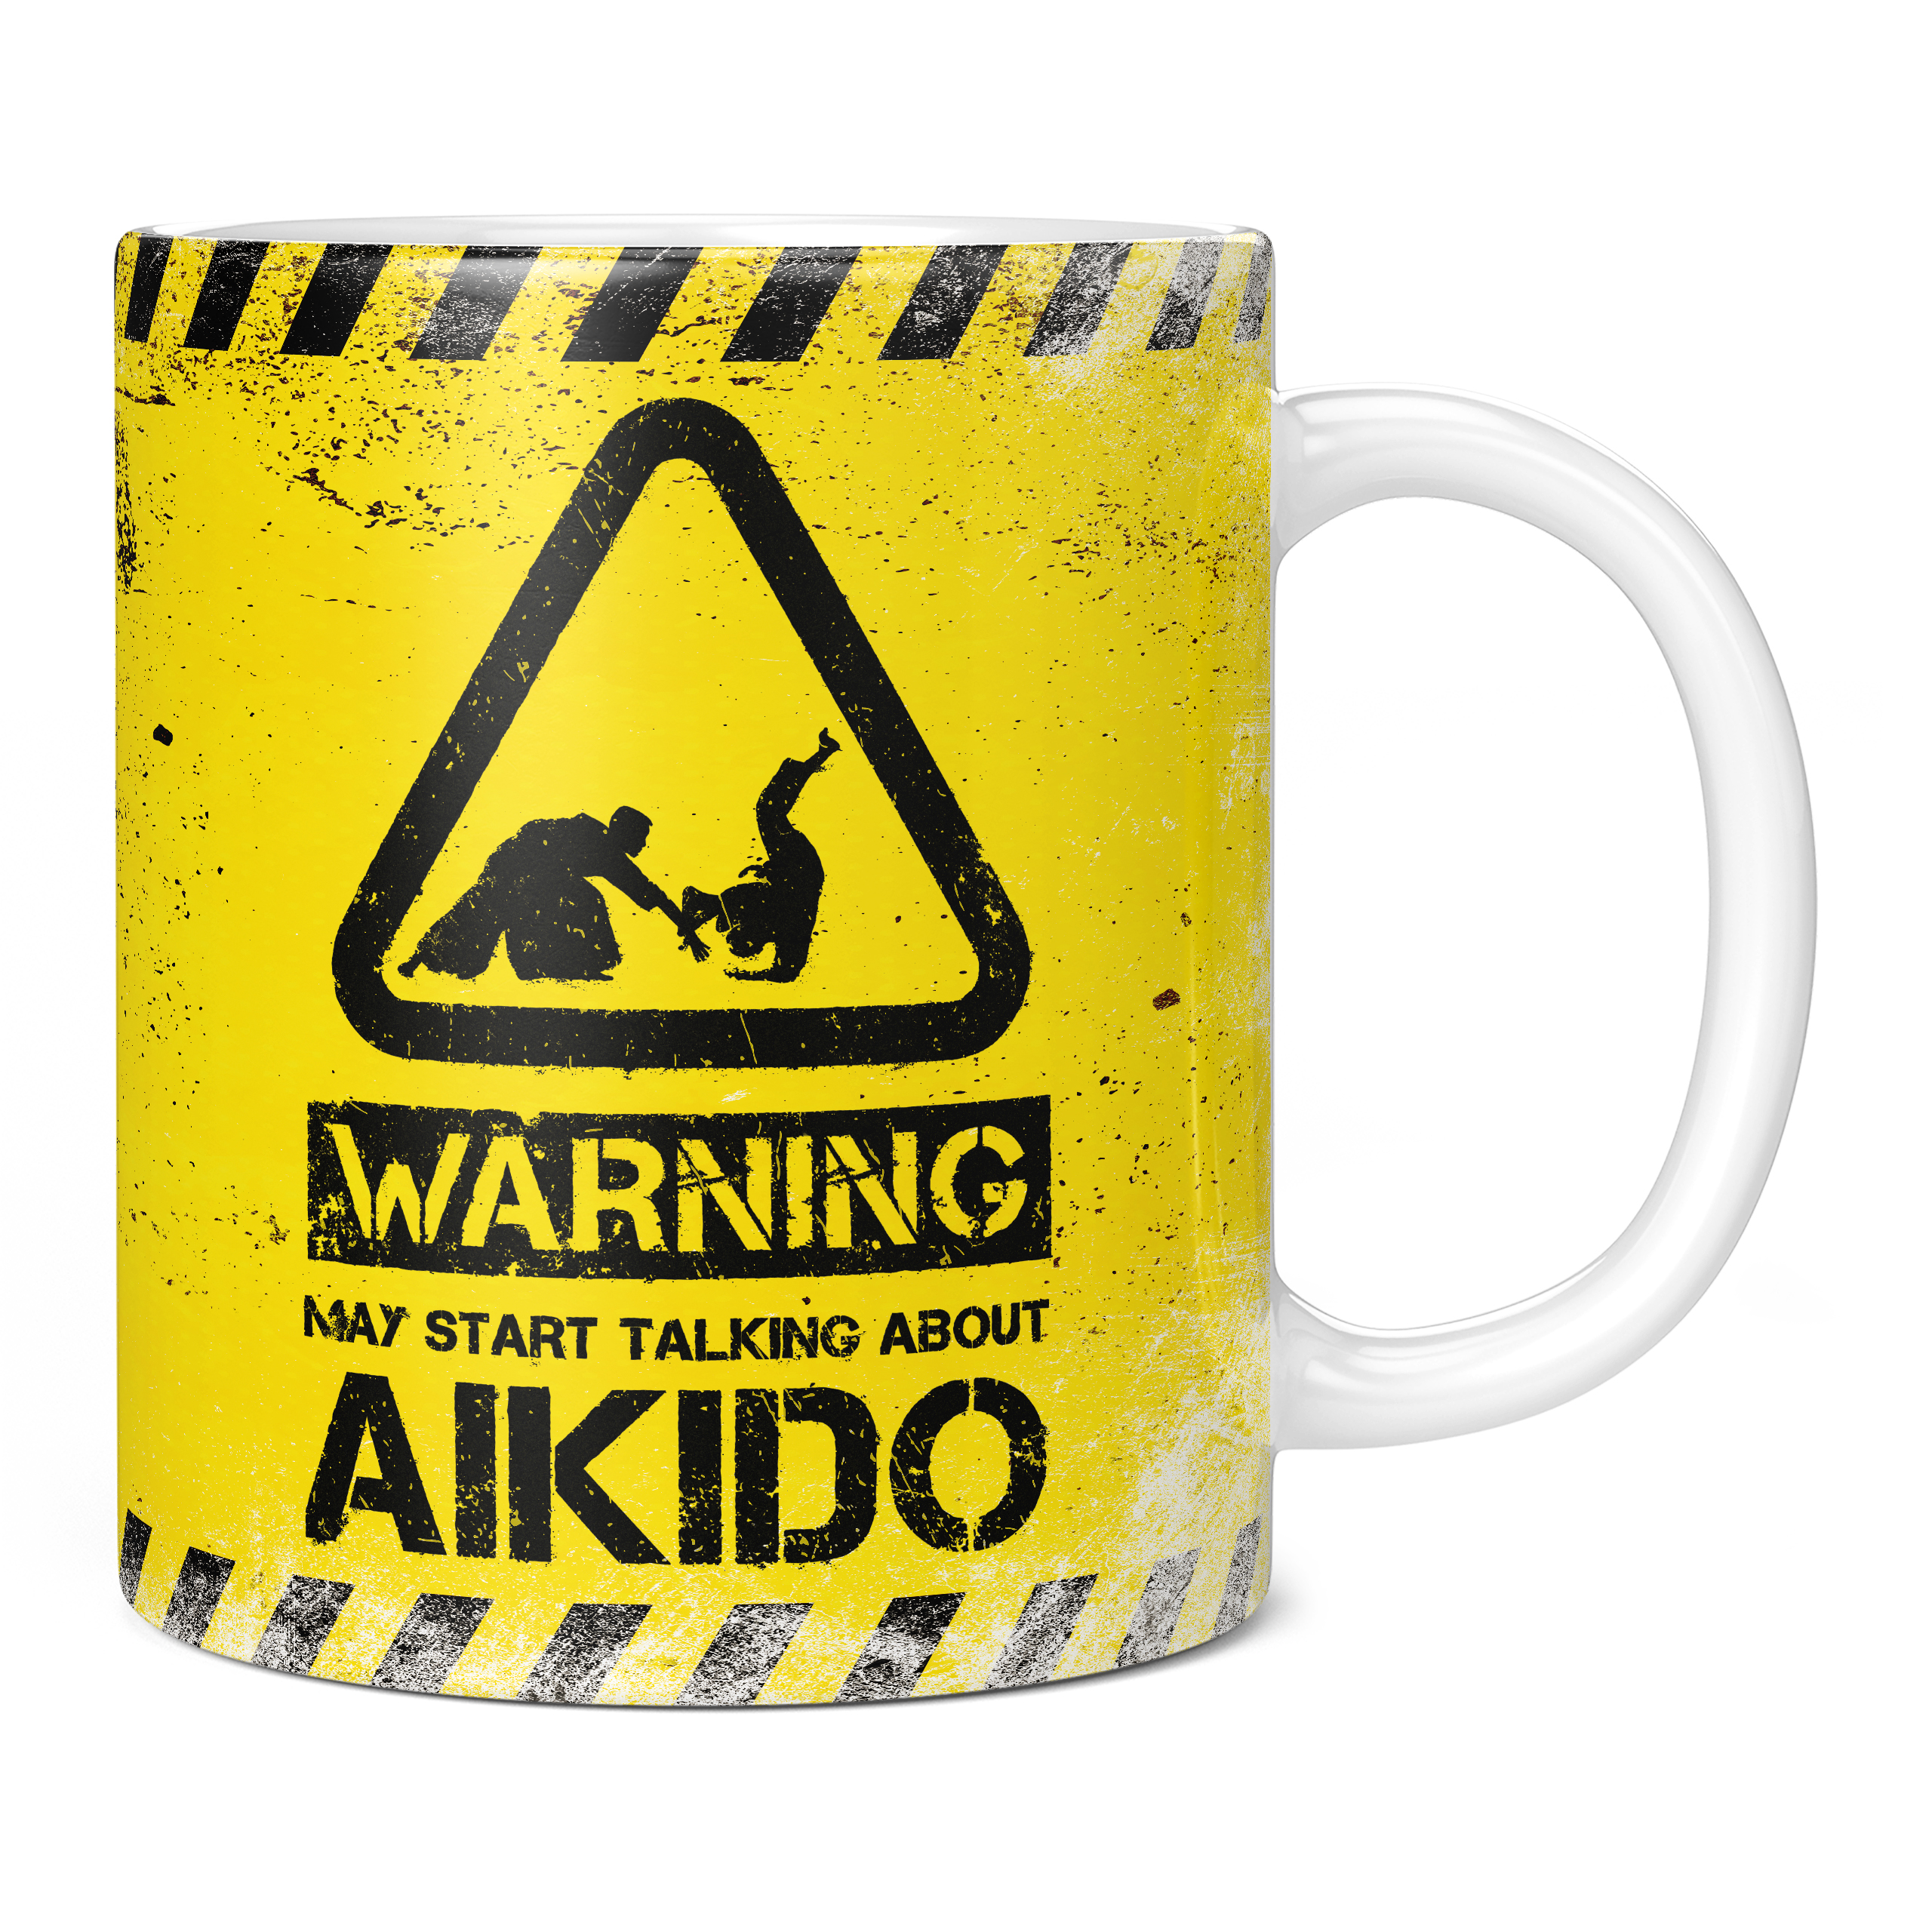 WARNING MAY START TALKING ABOUT AIKIDO 11oz NOVELTY MUG Mugs